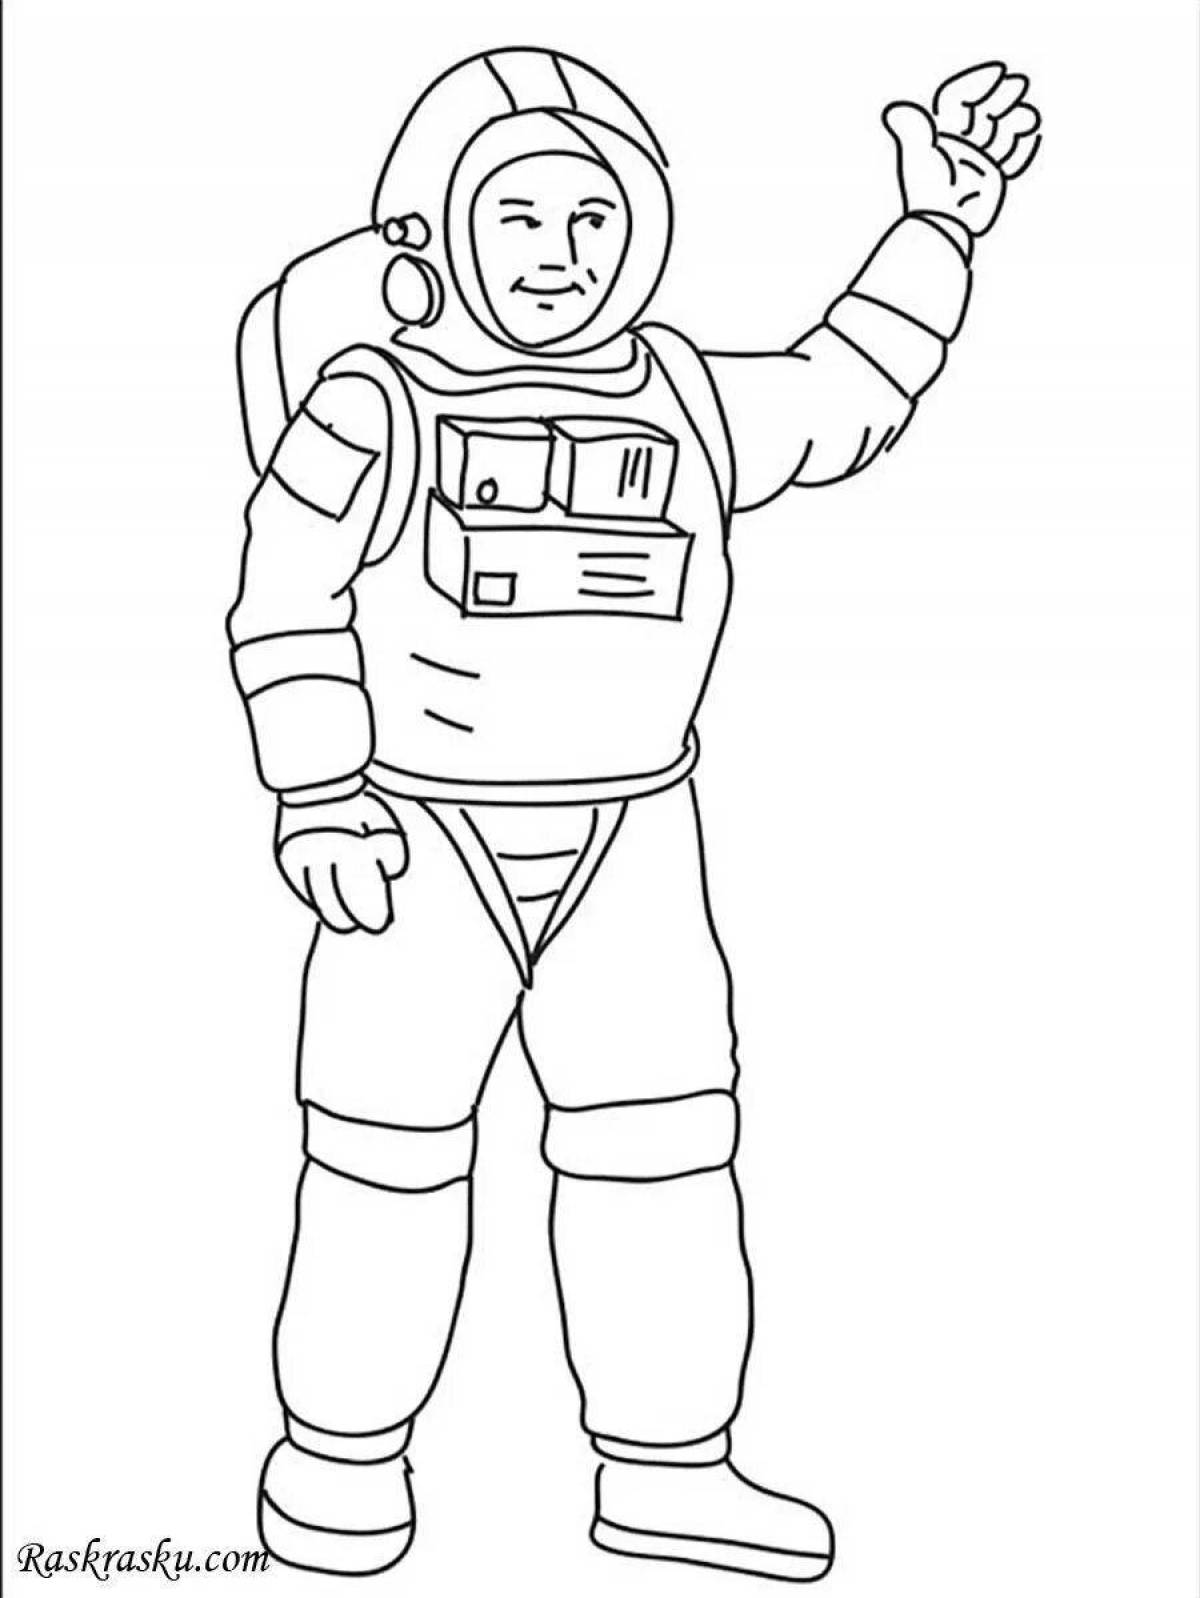 Dazzling spacesuit astronaut